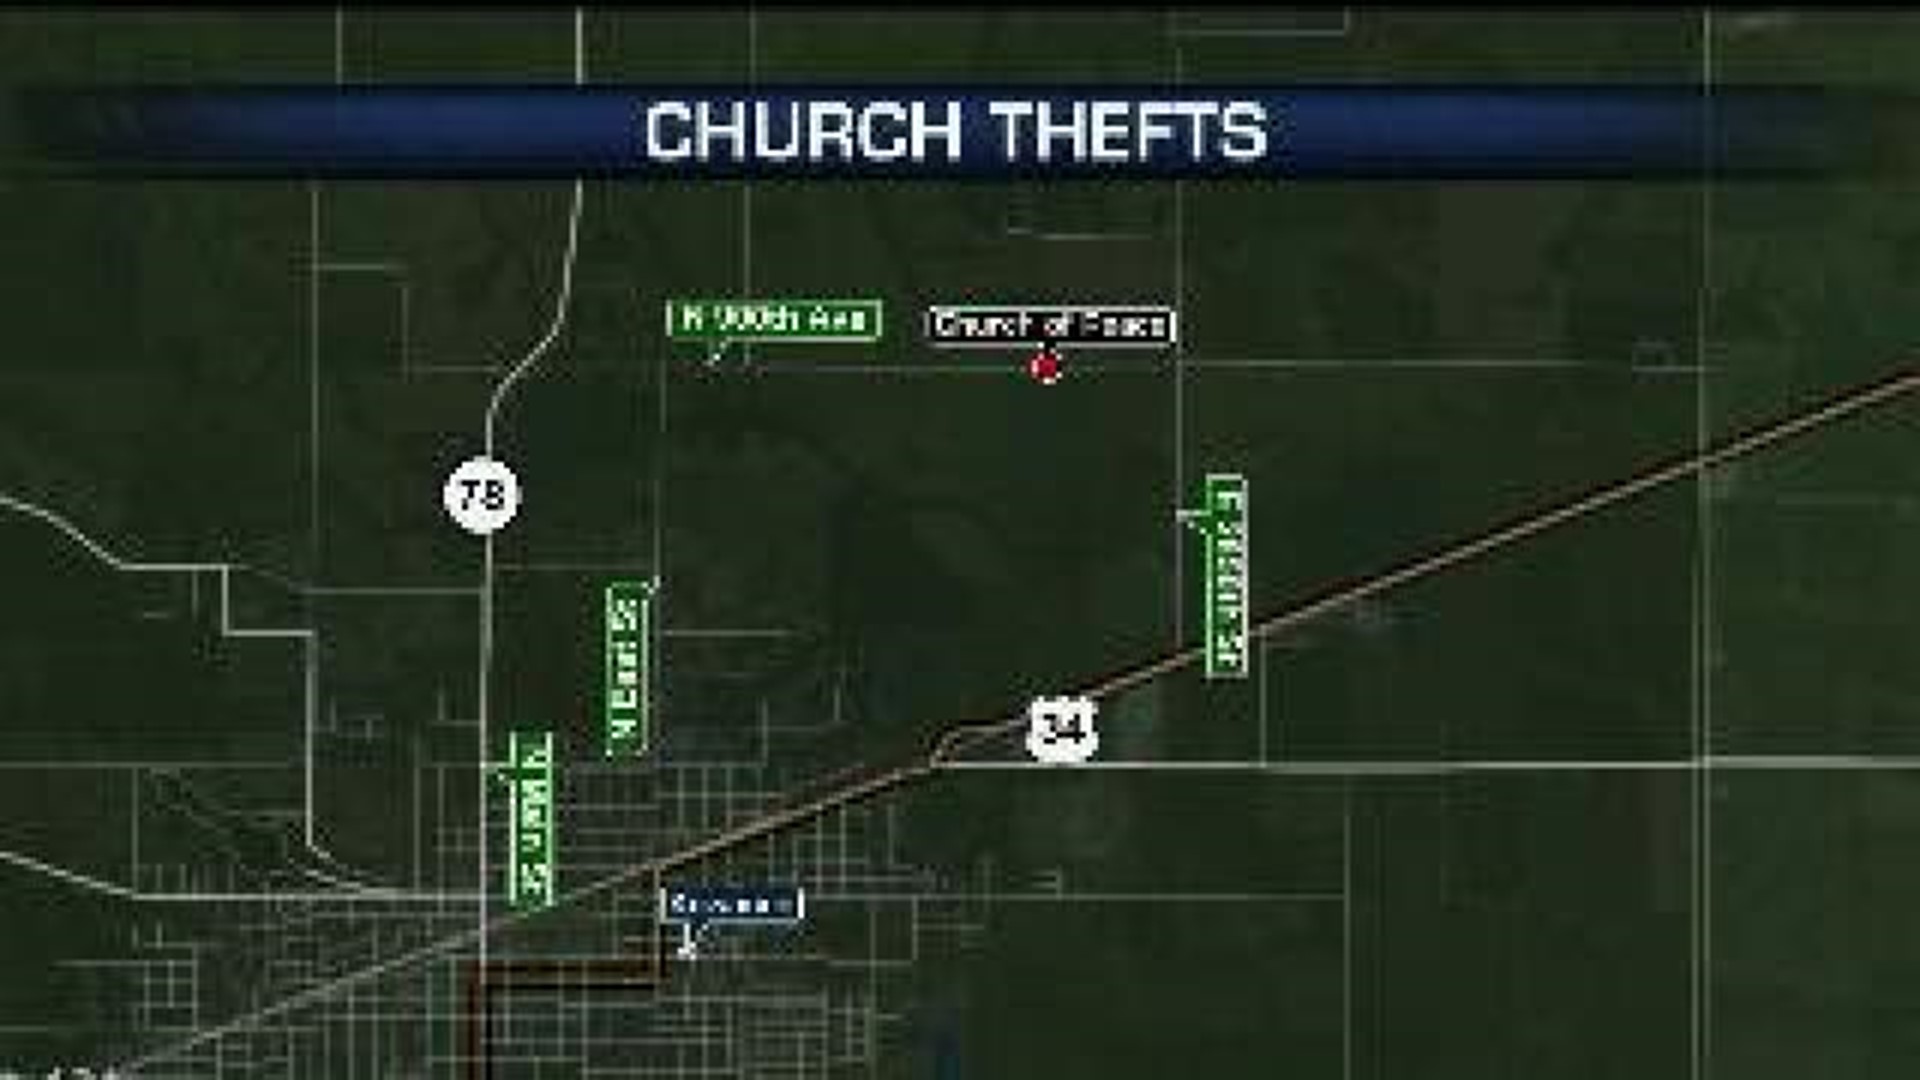 Kewanee church reports thefts